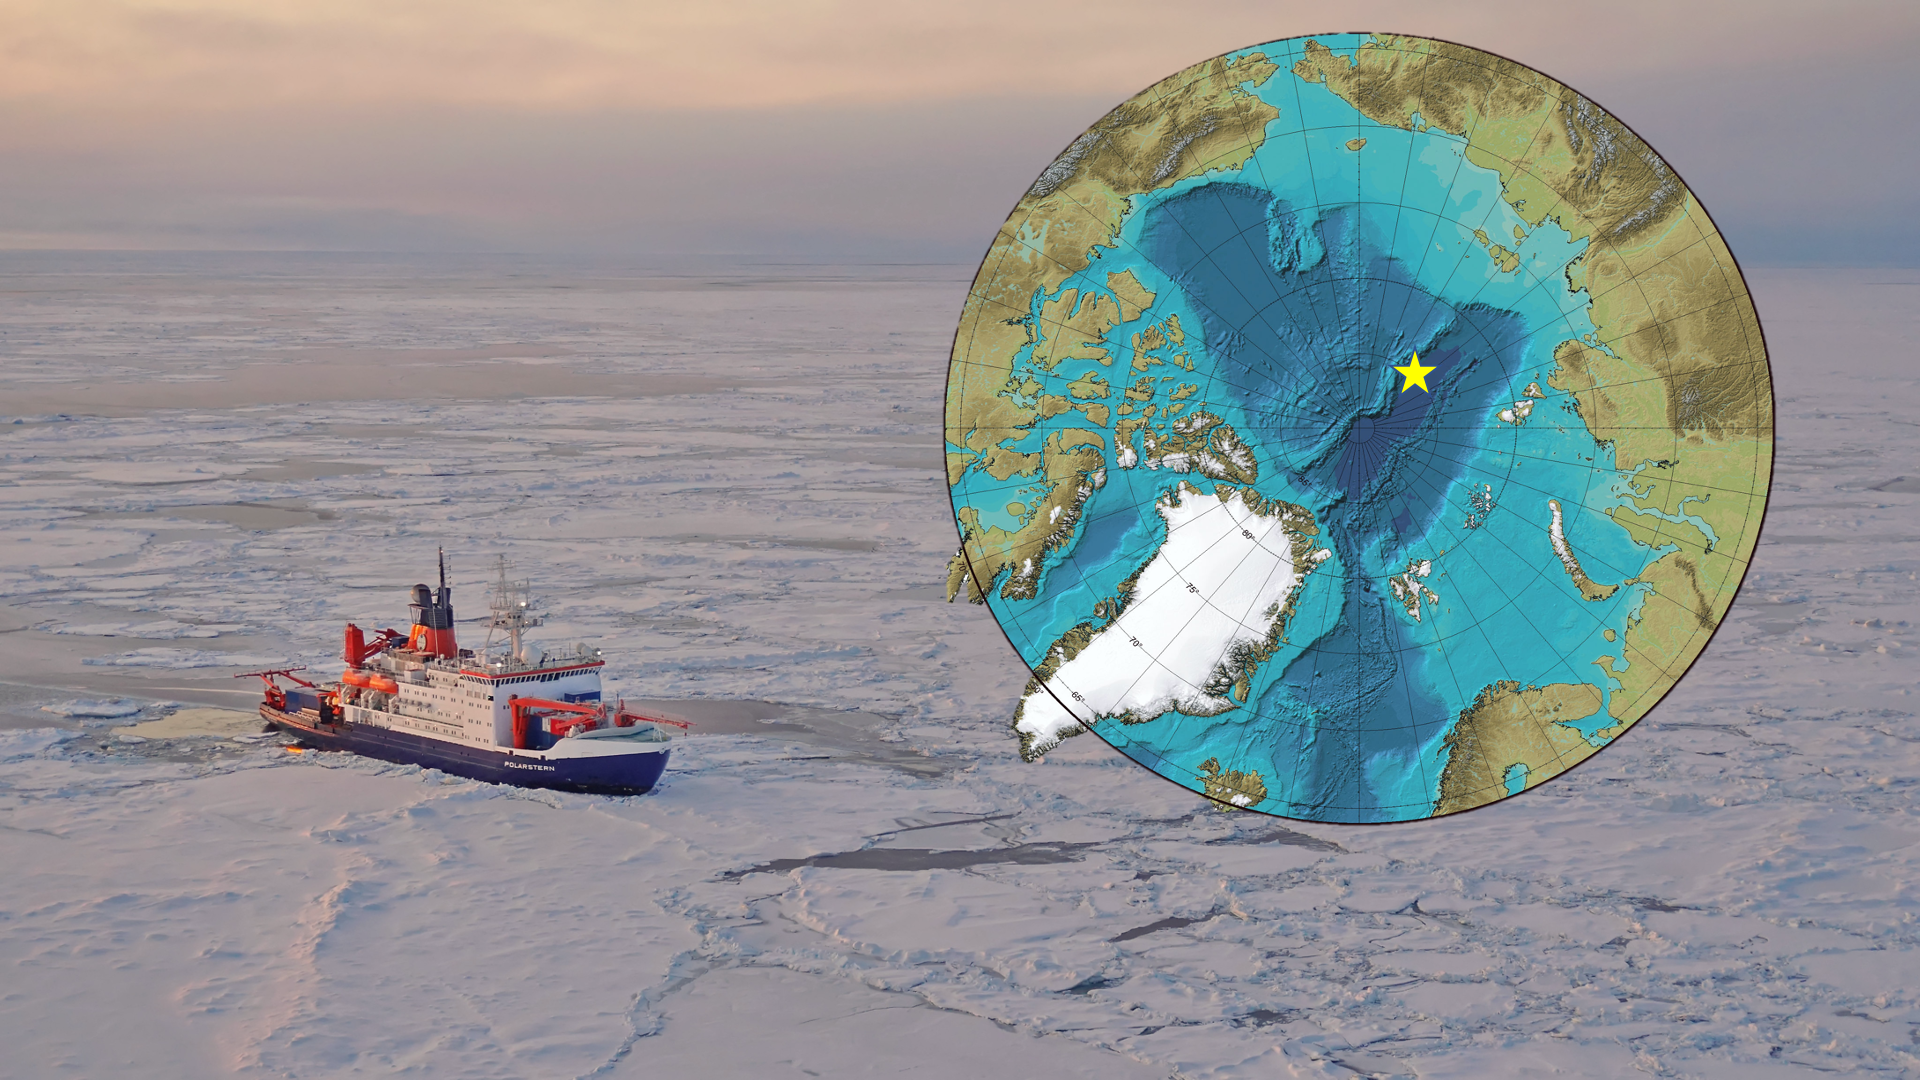 Polarstern in the ice